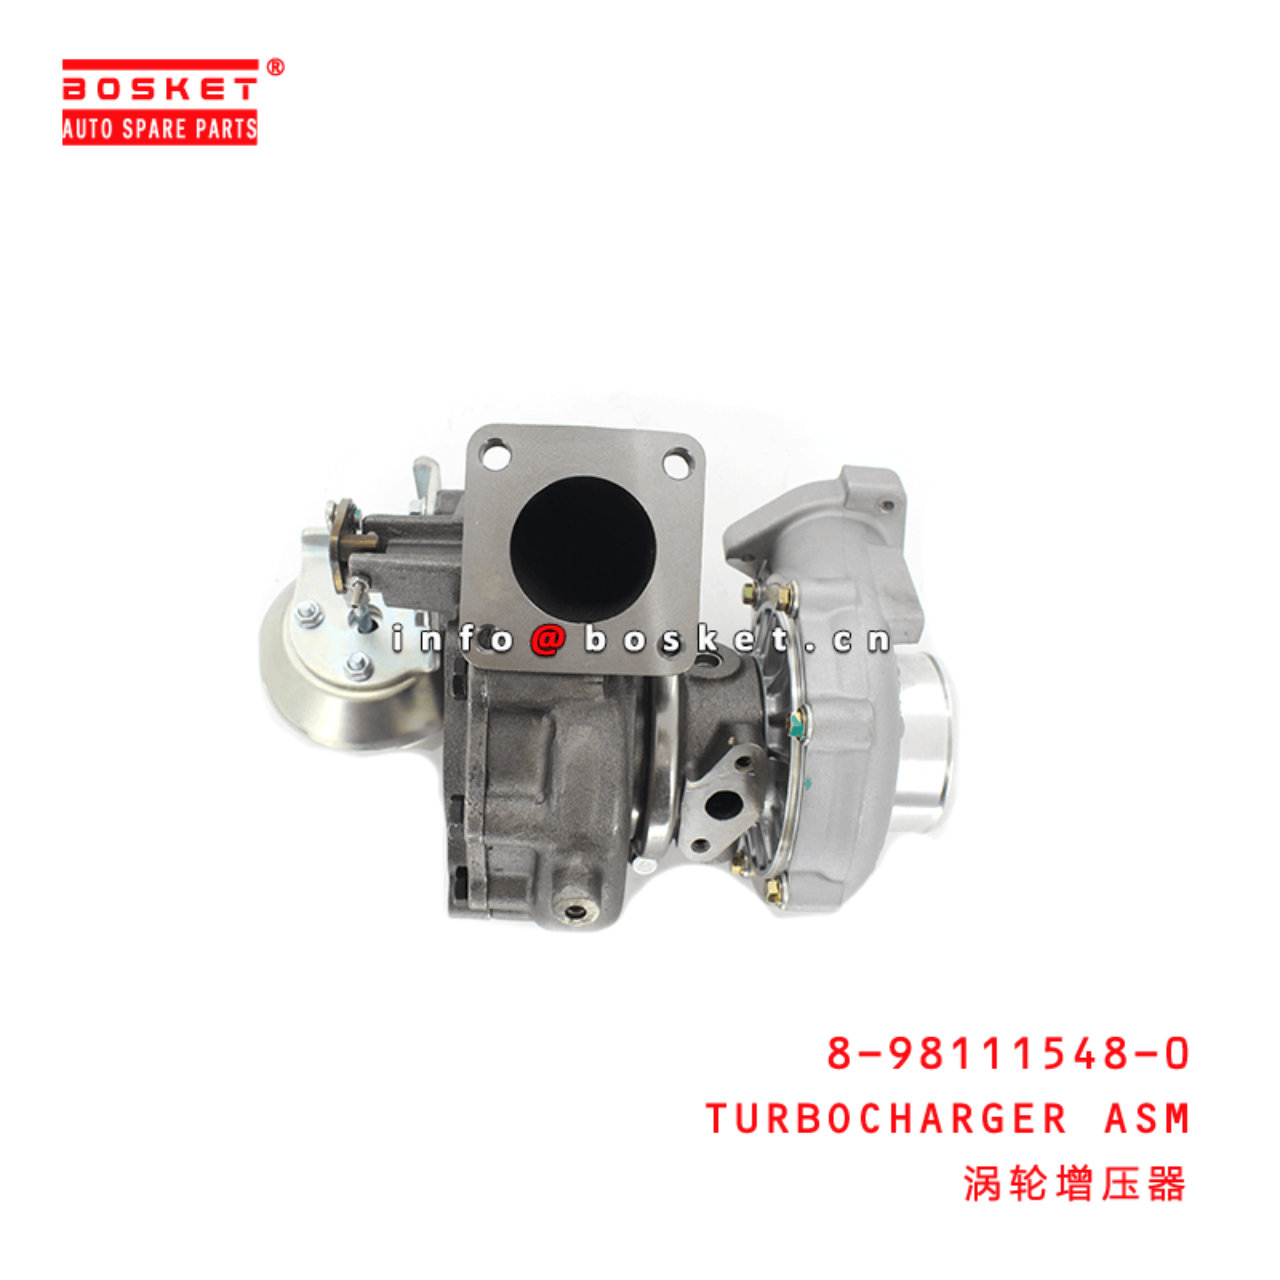 8-98111548-0 Turbocharger Assembly 8981115480 Suitable for ISUZU NMR 4JJ1T 